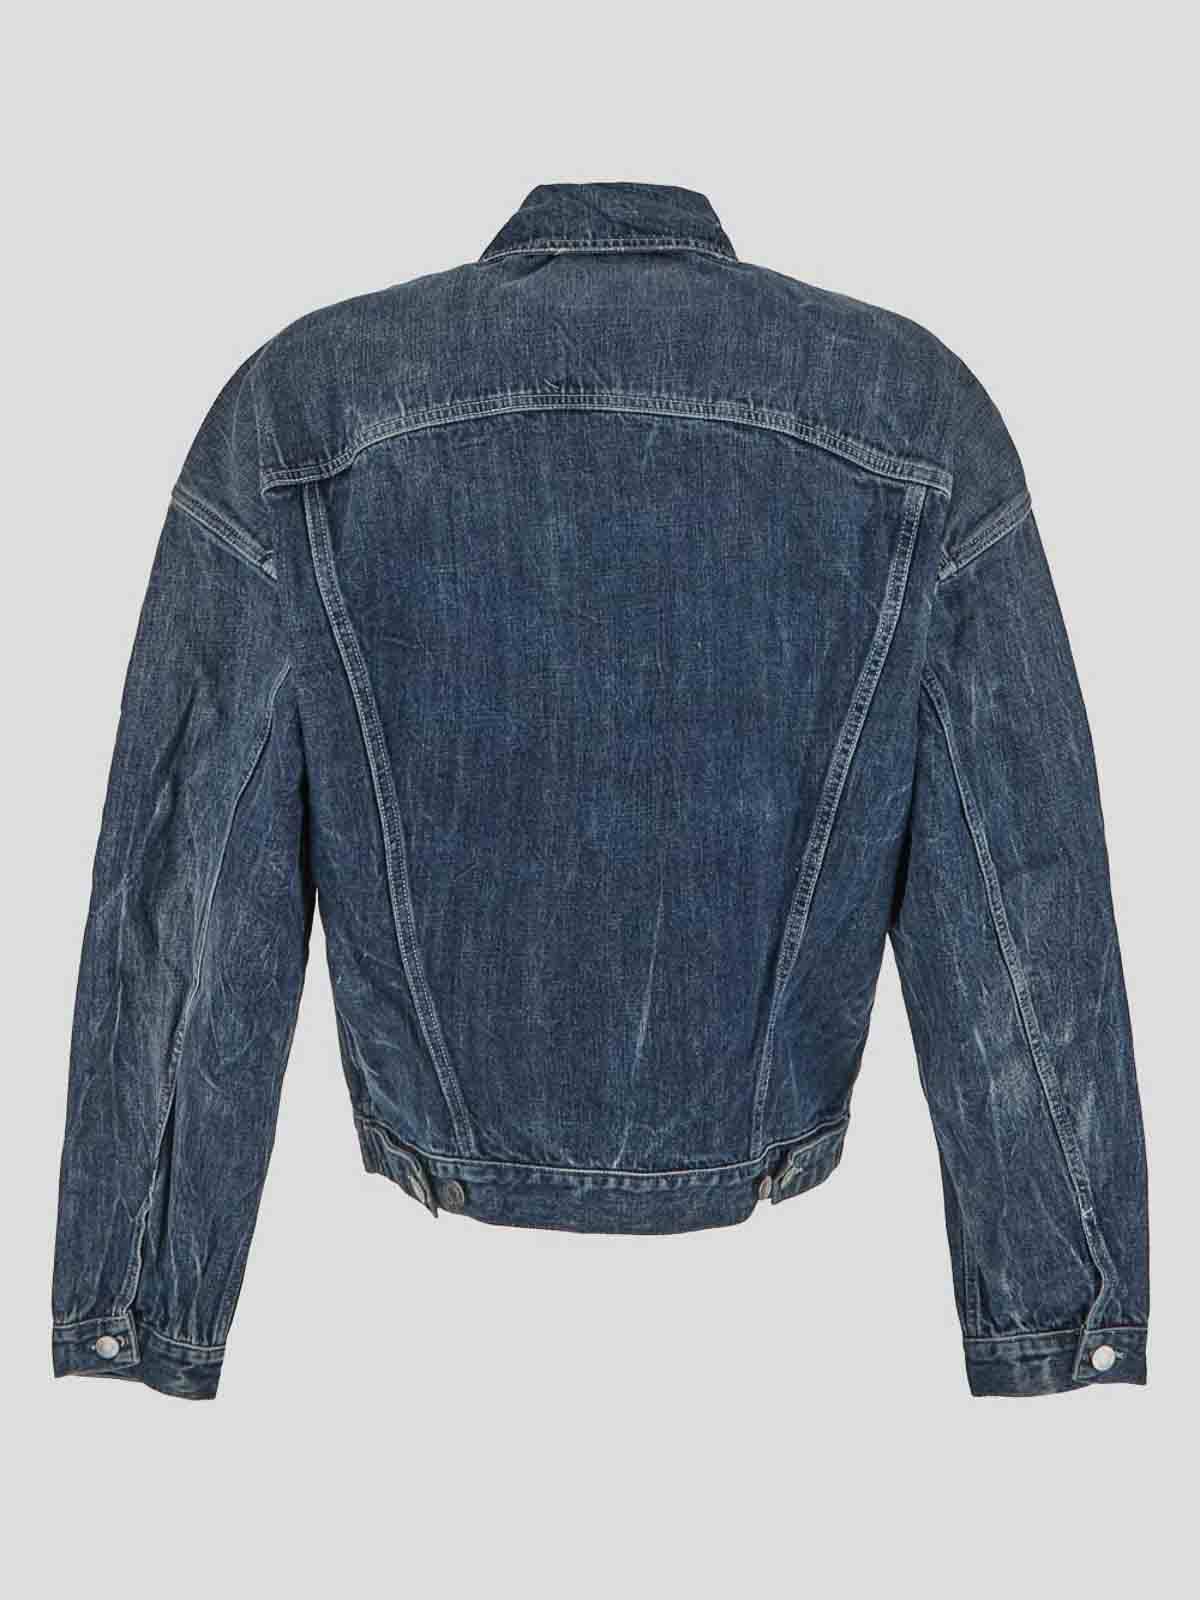 Buy Men Blue Light Wash Jacket Online in India - Monte Carlo